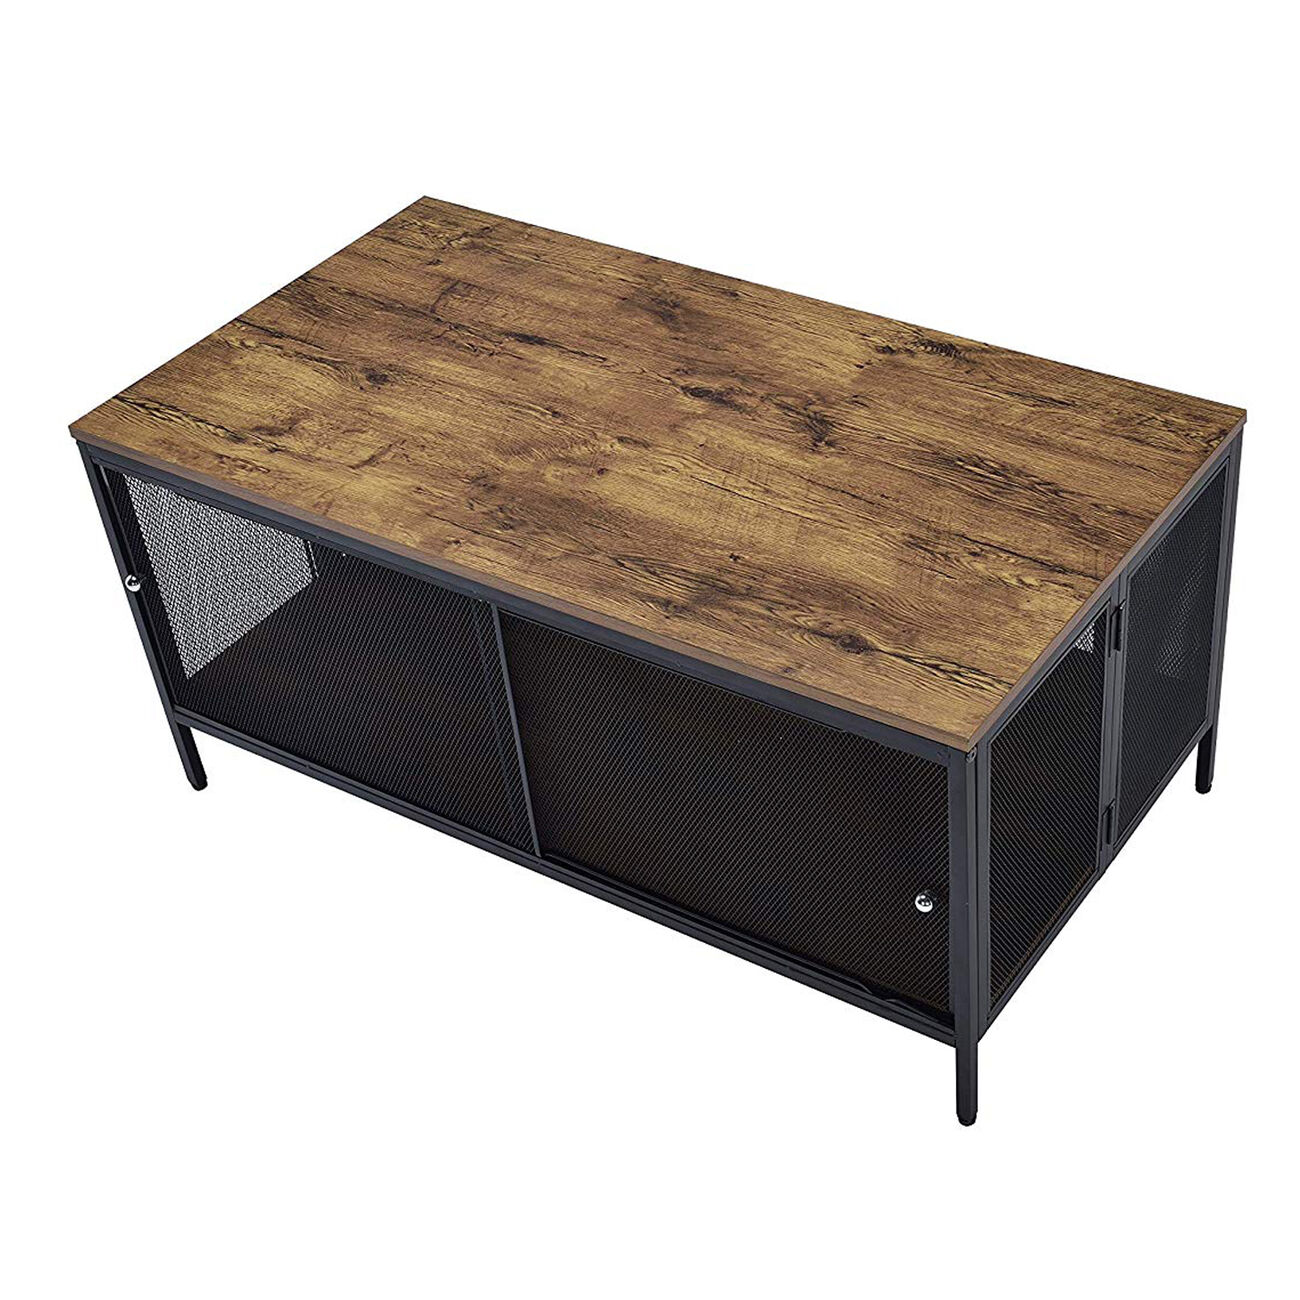 Metal Coffee Table with 1 Bottom Shelf and Mesh Design, Brown and Gray